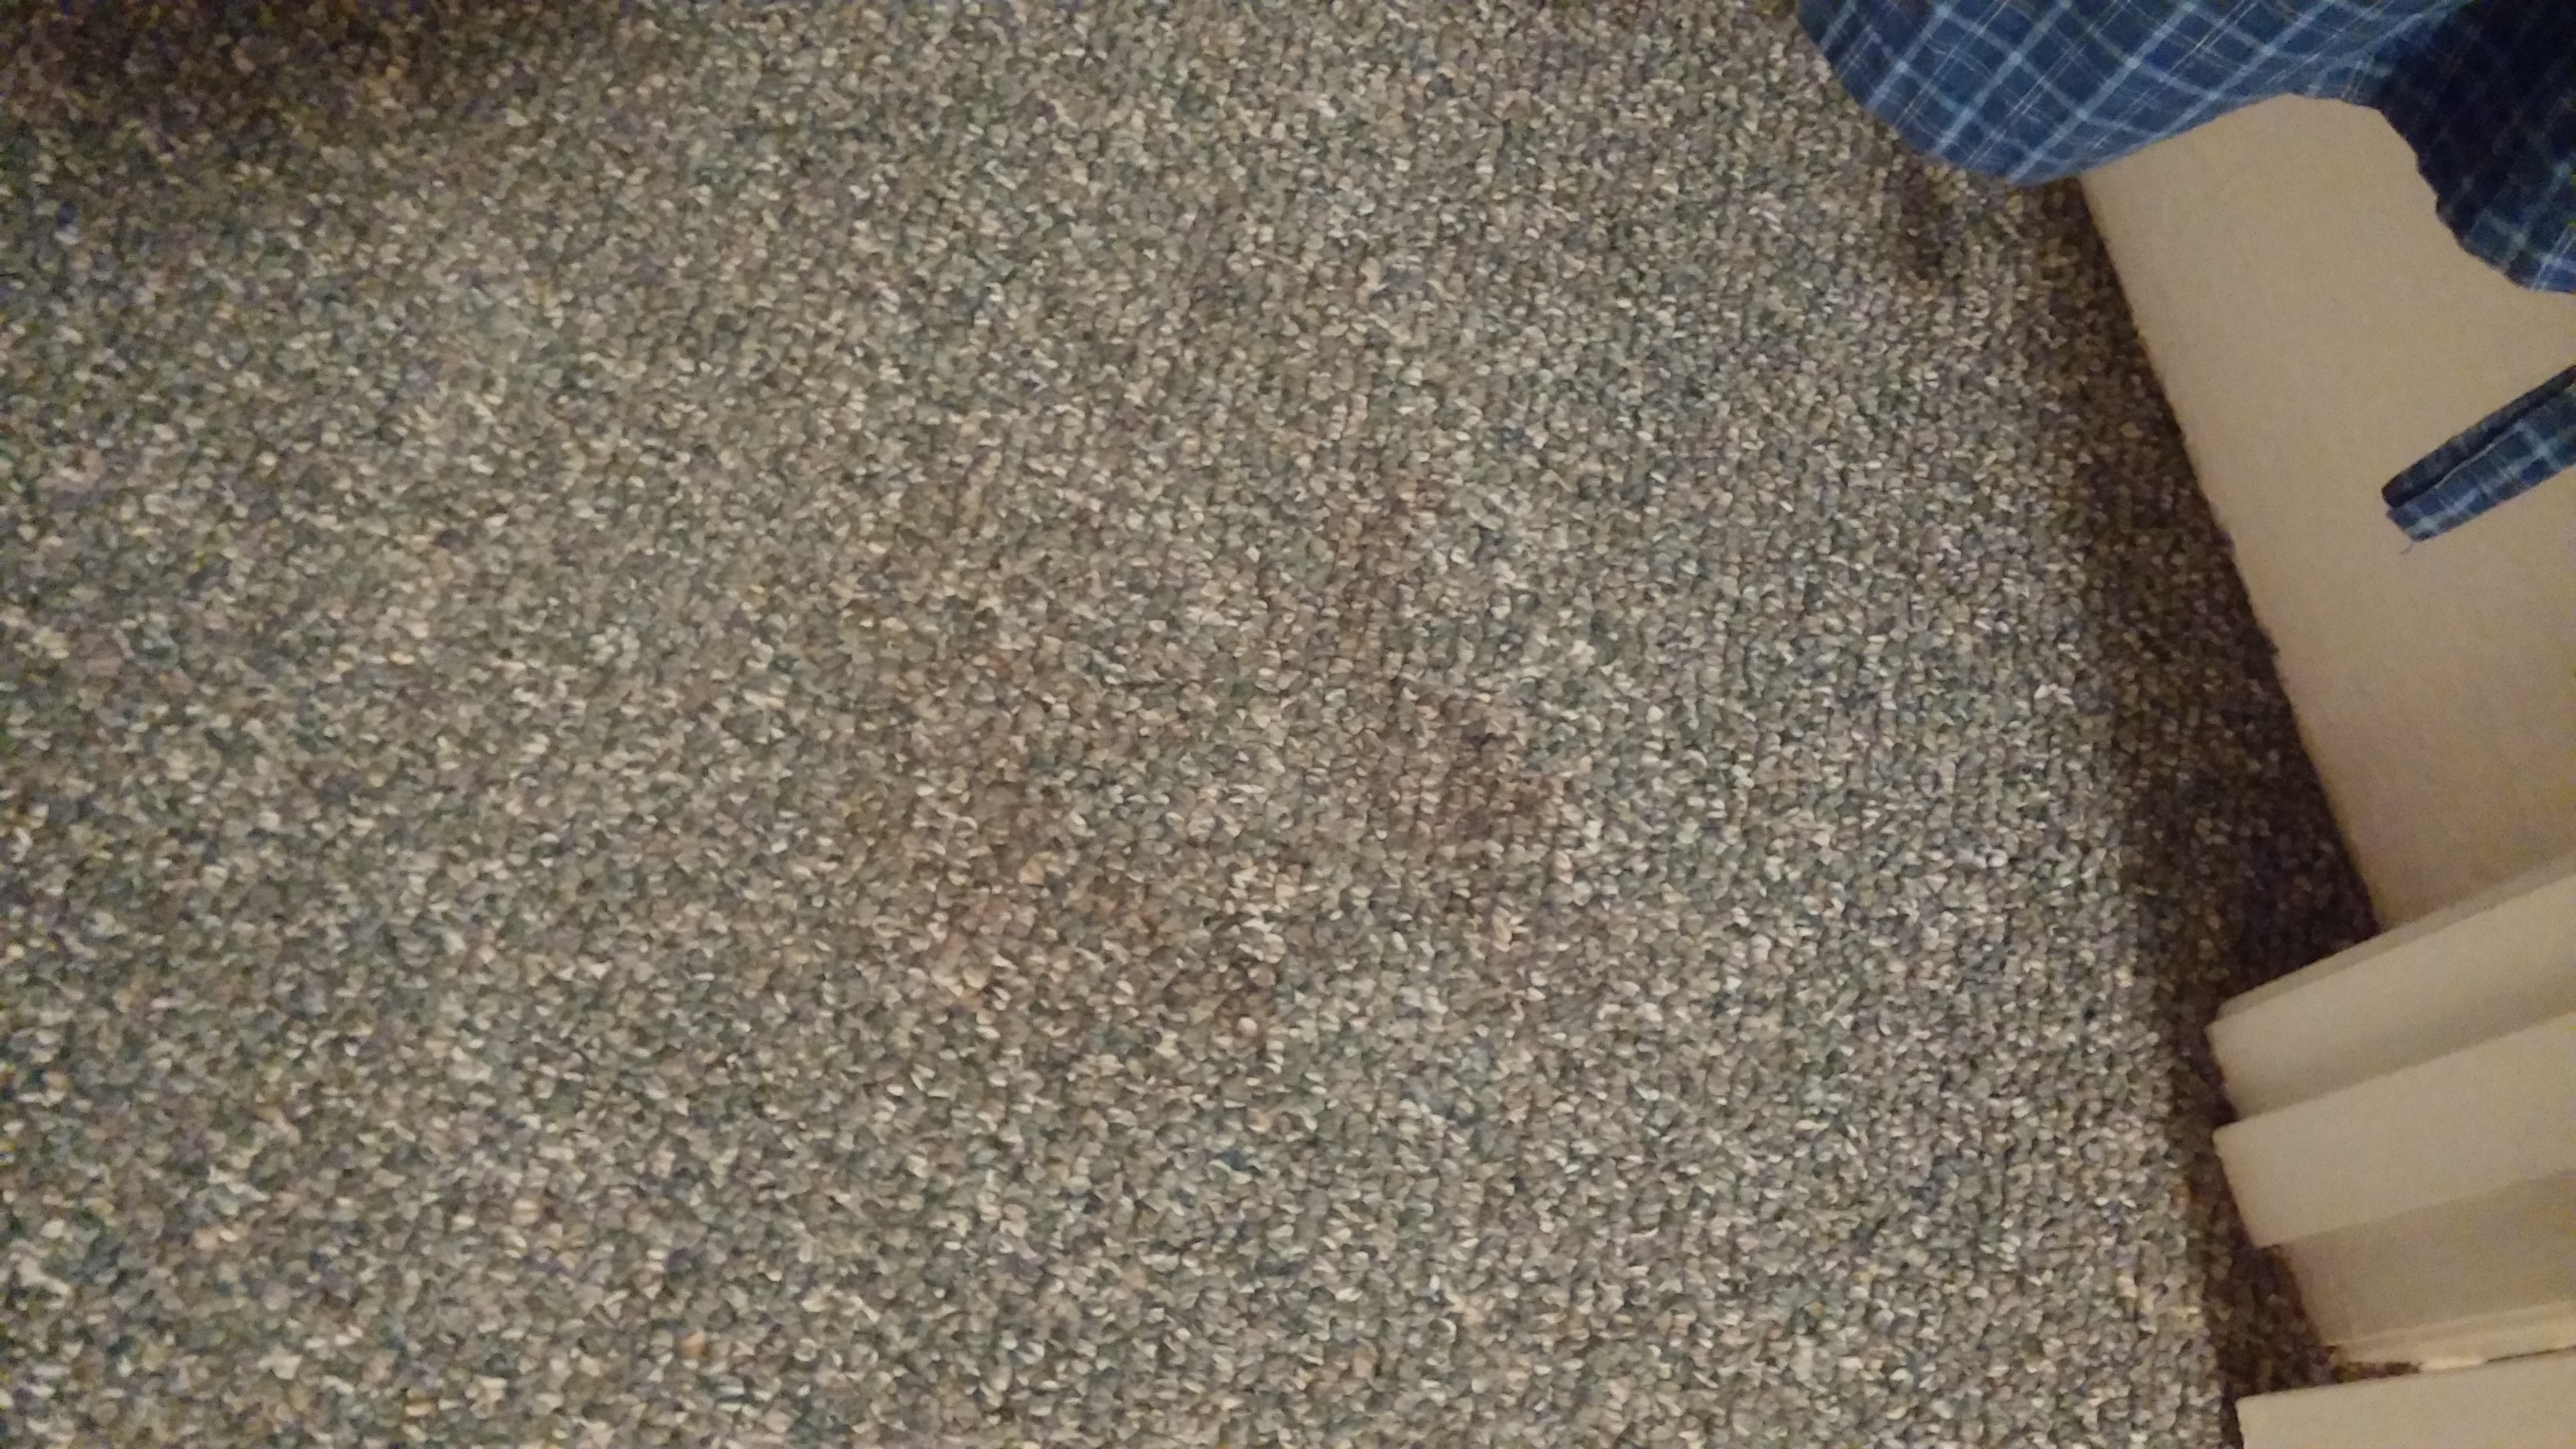 ChemDry Left a Dirty Carpet